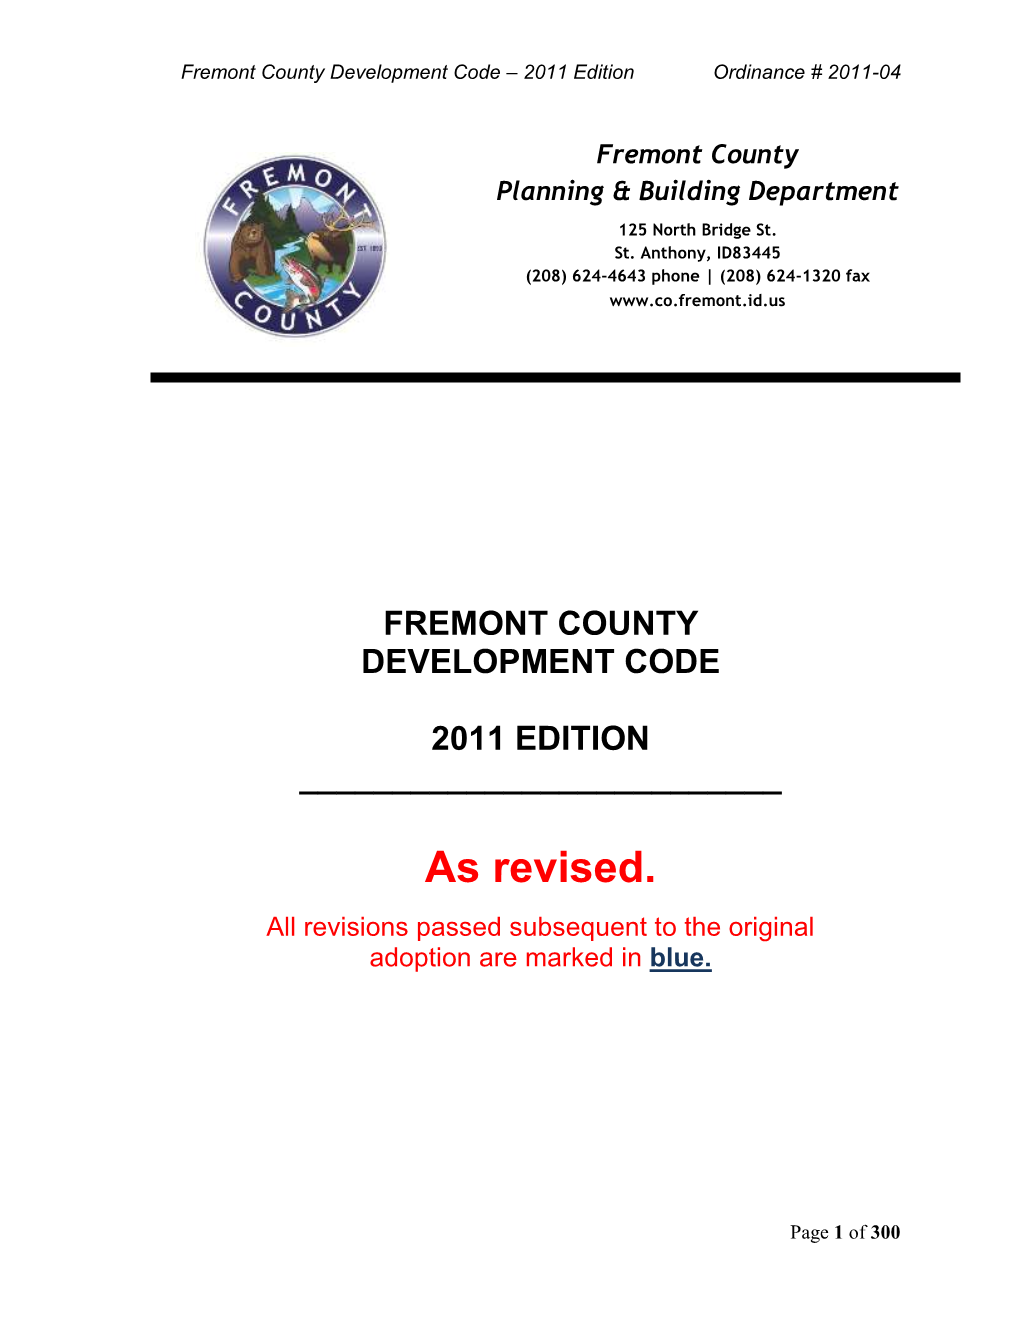 Fremont County Development Code 2011 Edition